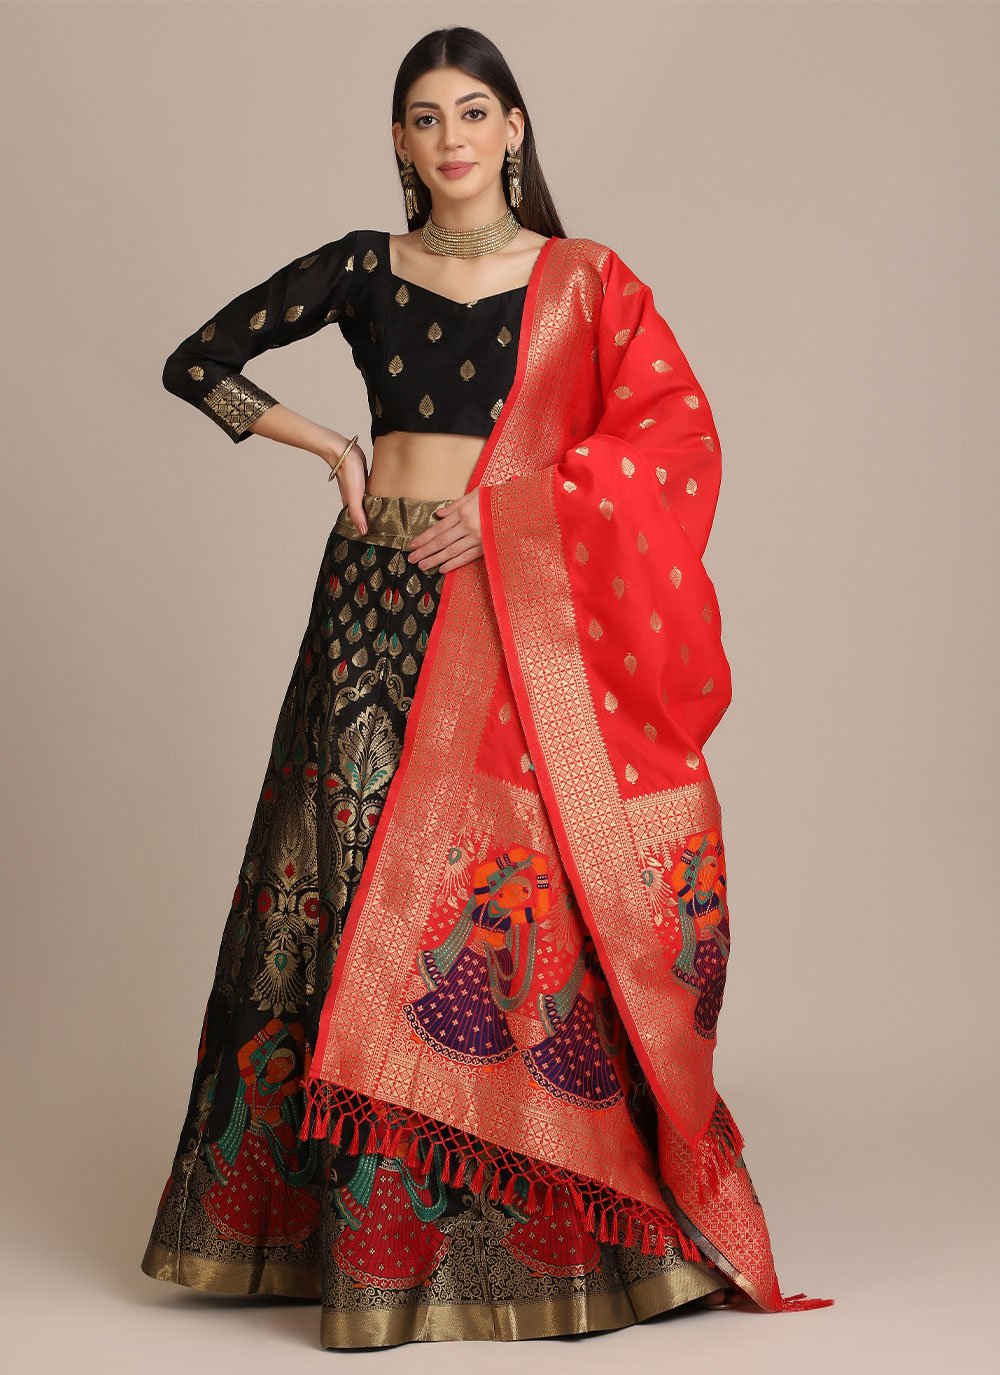 MYNTRA*Wedding Wear* HAUL😍|| Lehenga choli, Saree, Sharara set,  Indo-western Dresses Under 1500/- 🎉 - YouTube